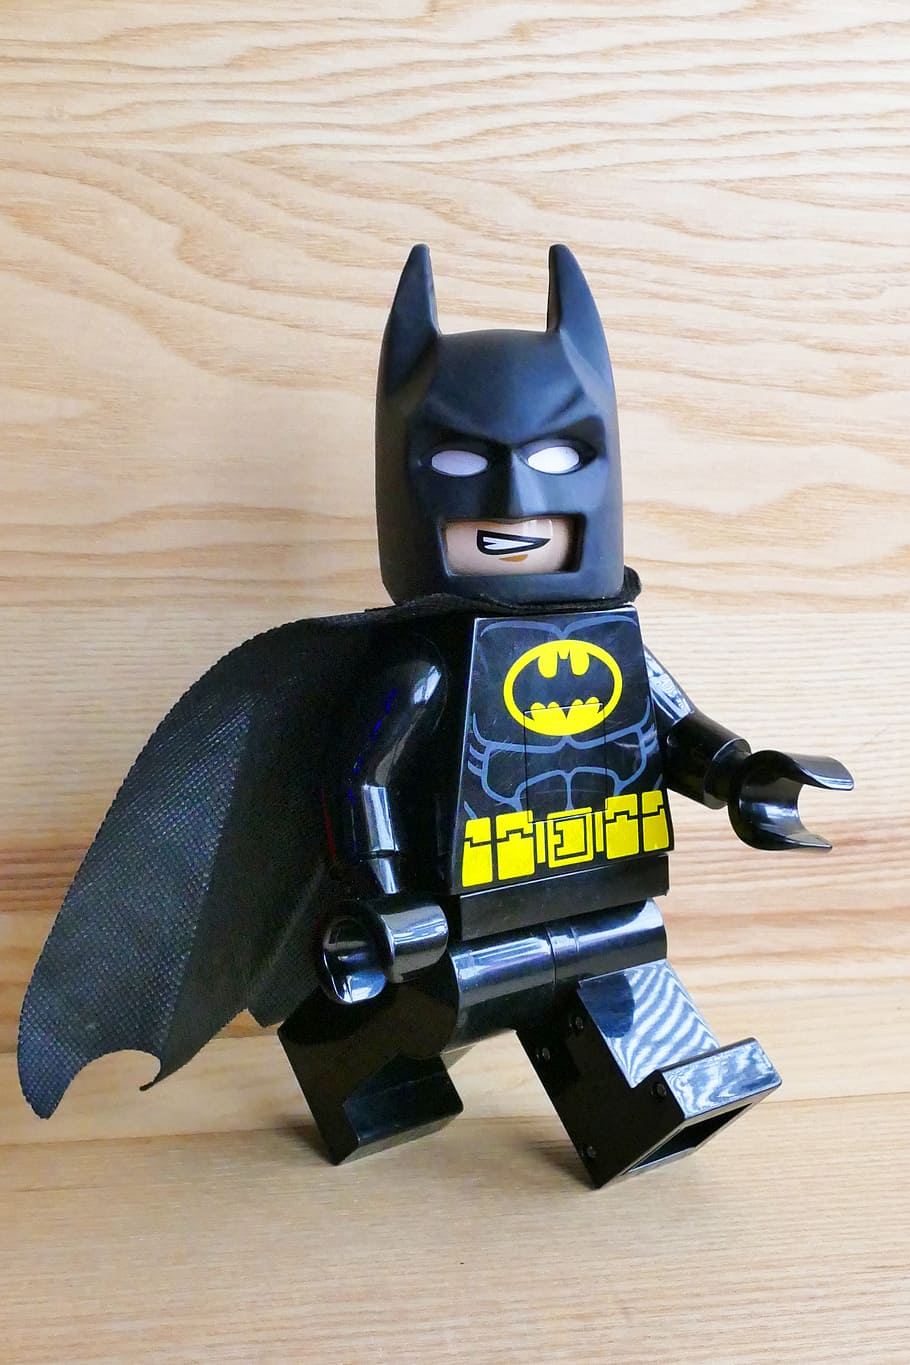 LEGO batman minifig, toys, kids, child, play, childhood, fun, HD wallpaper